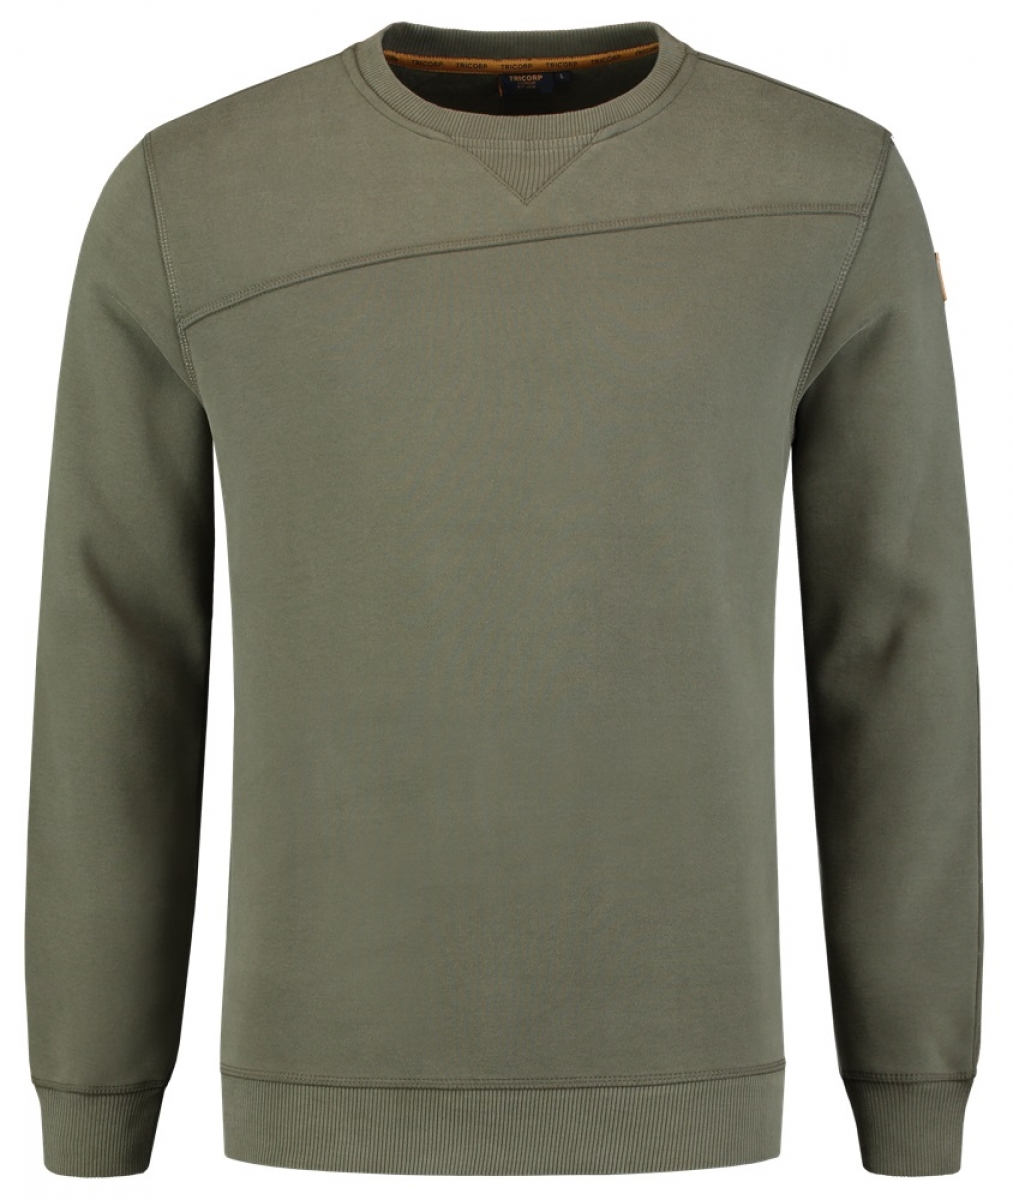 TRICORP-Worker-Shirts, Sweater, Premium, 300 g/m, army